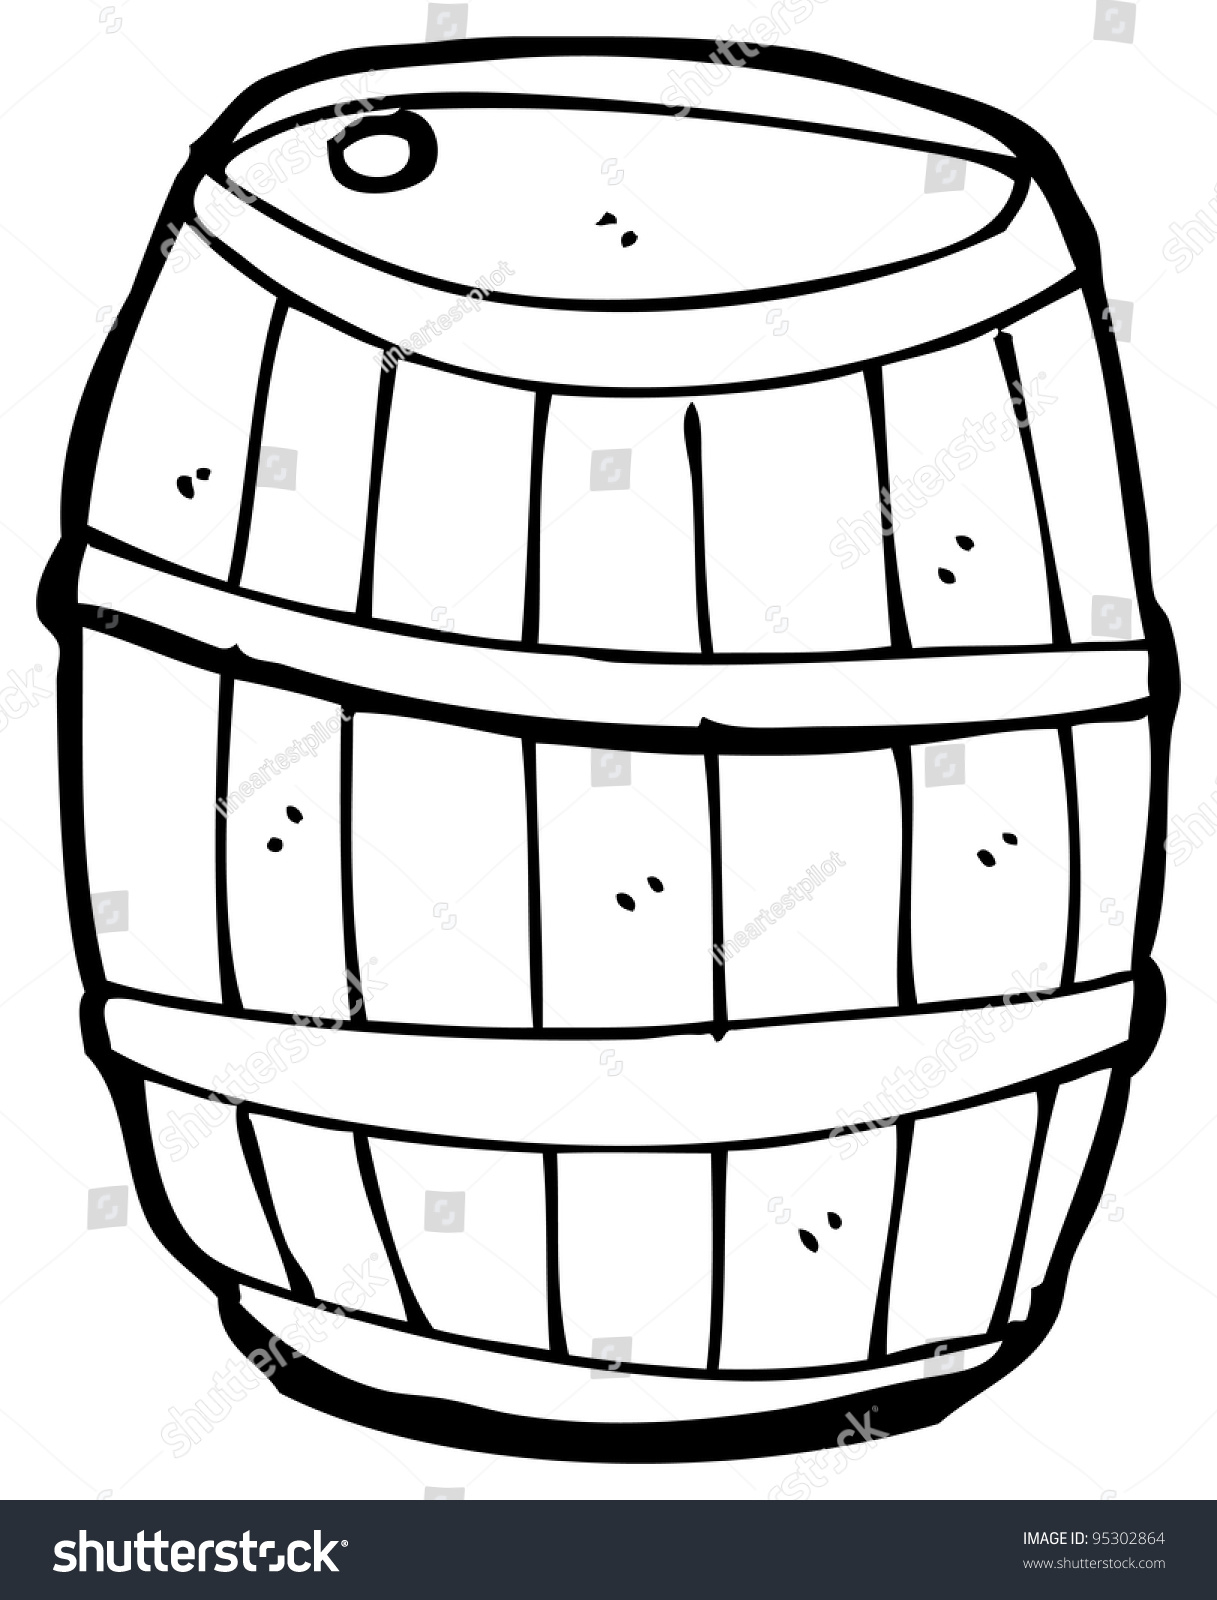 Cartoon Barrel (Raster Version) Stock Photo 95302864 : Shutterstock